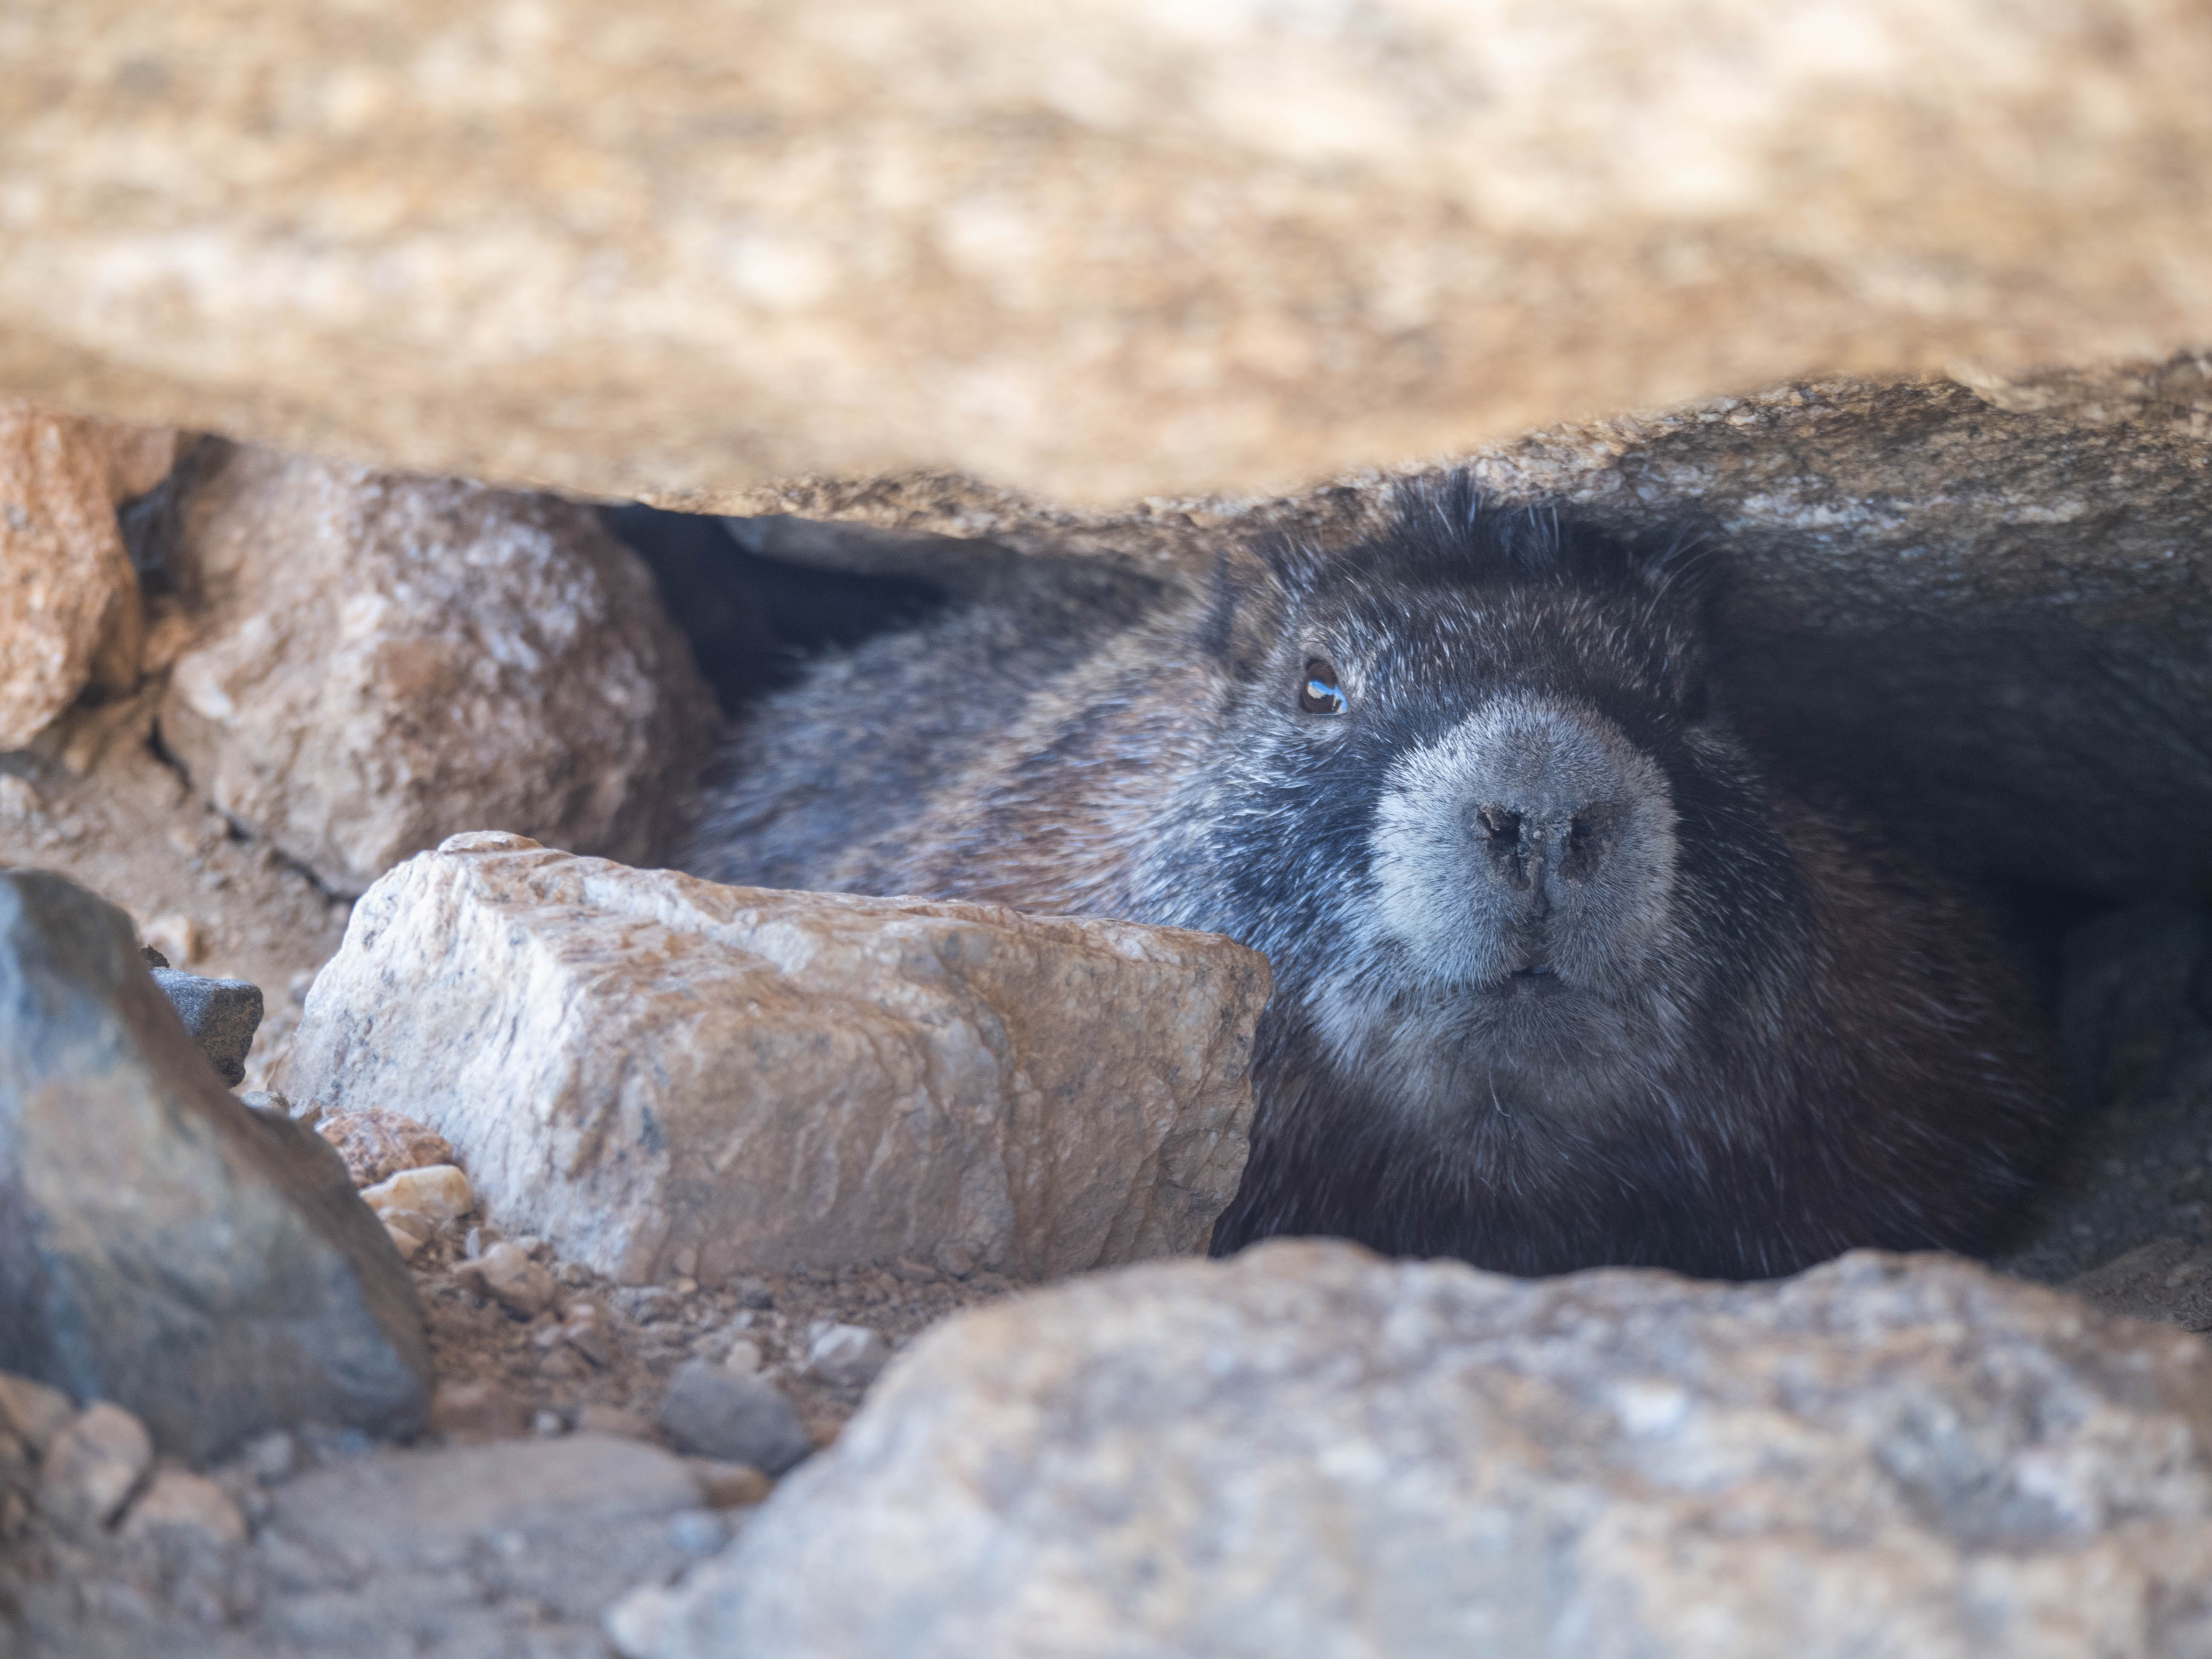 A marmot looking at the camera